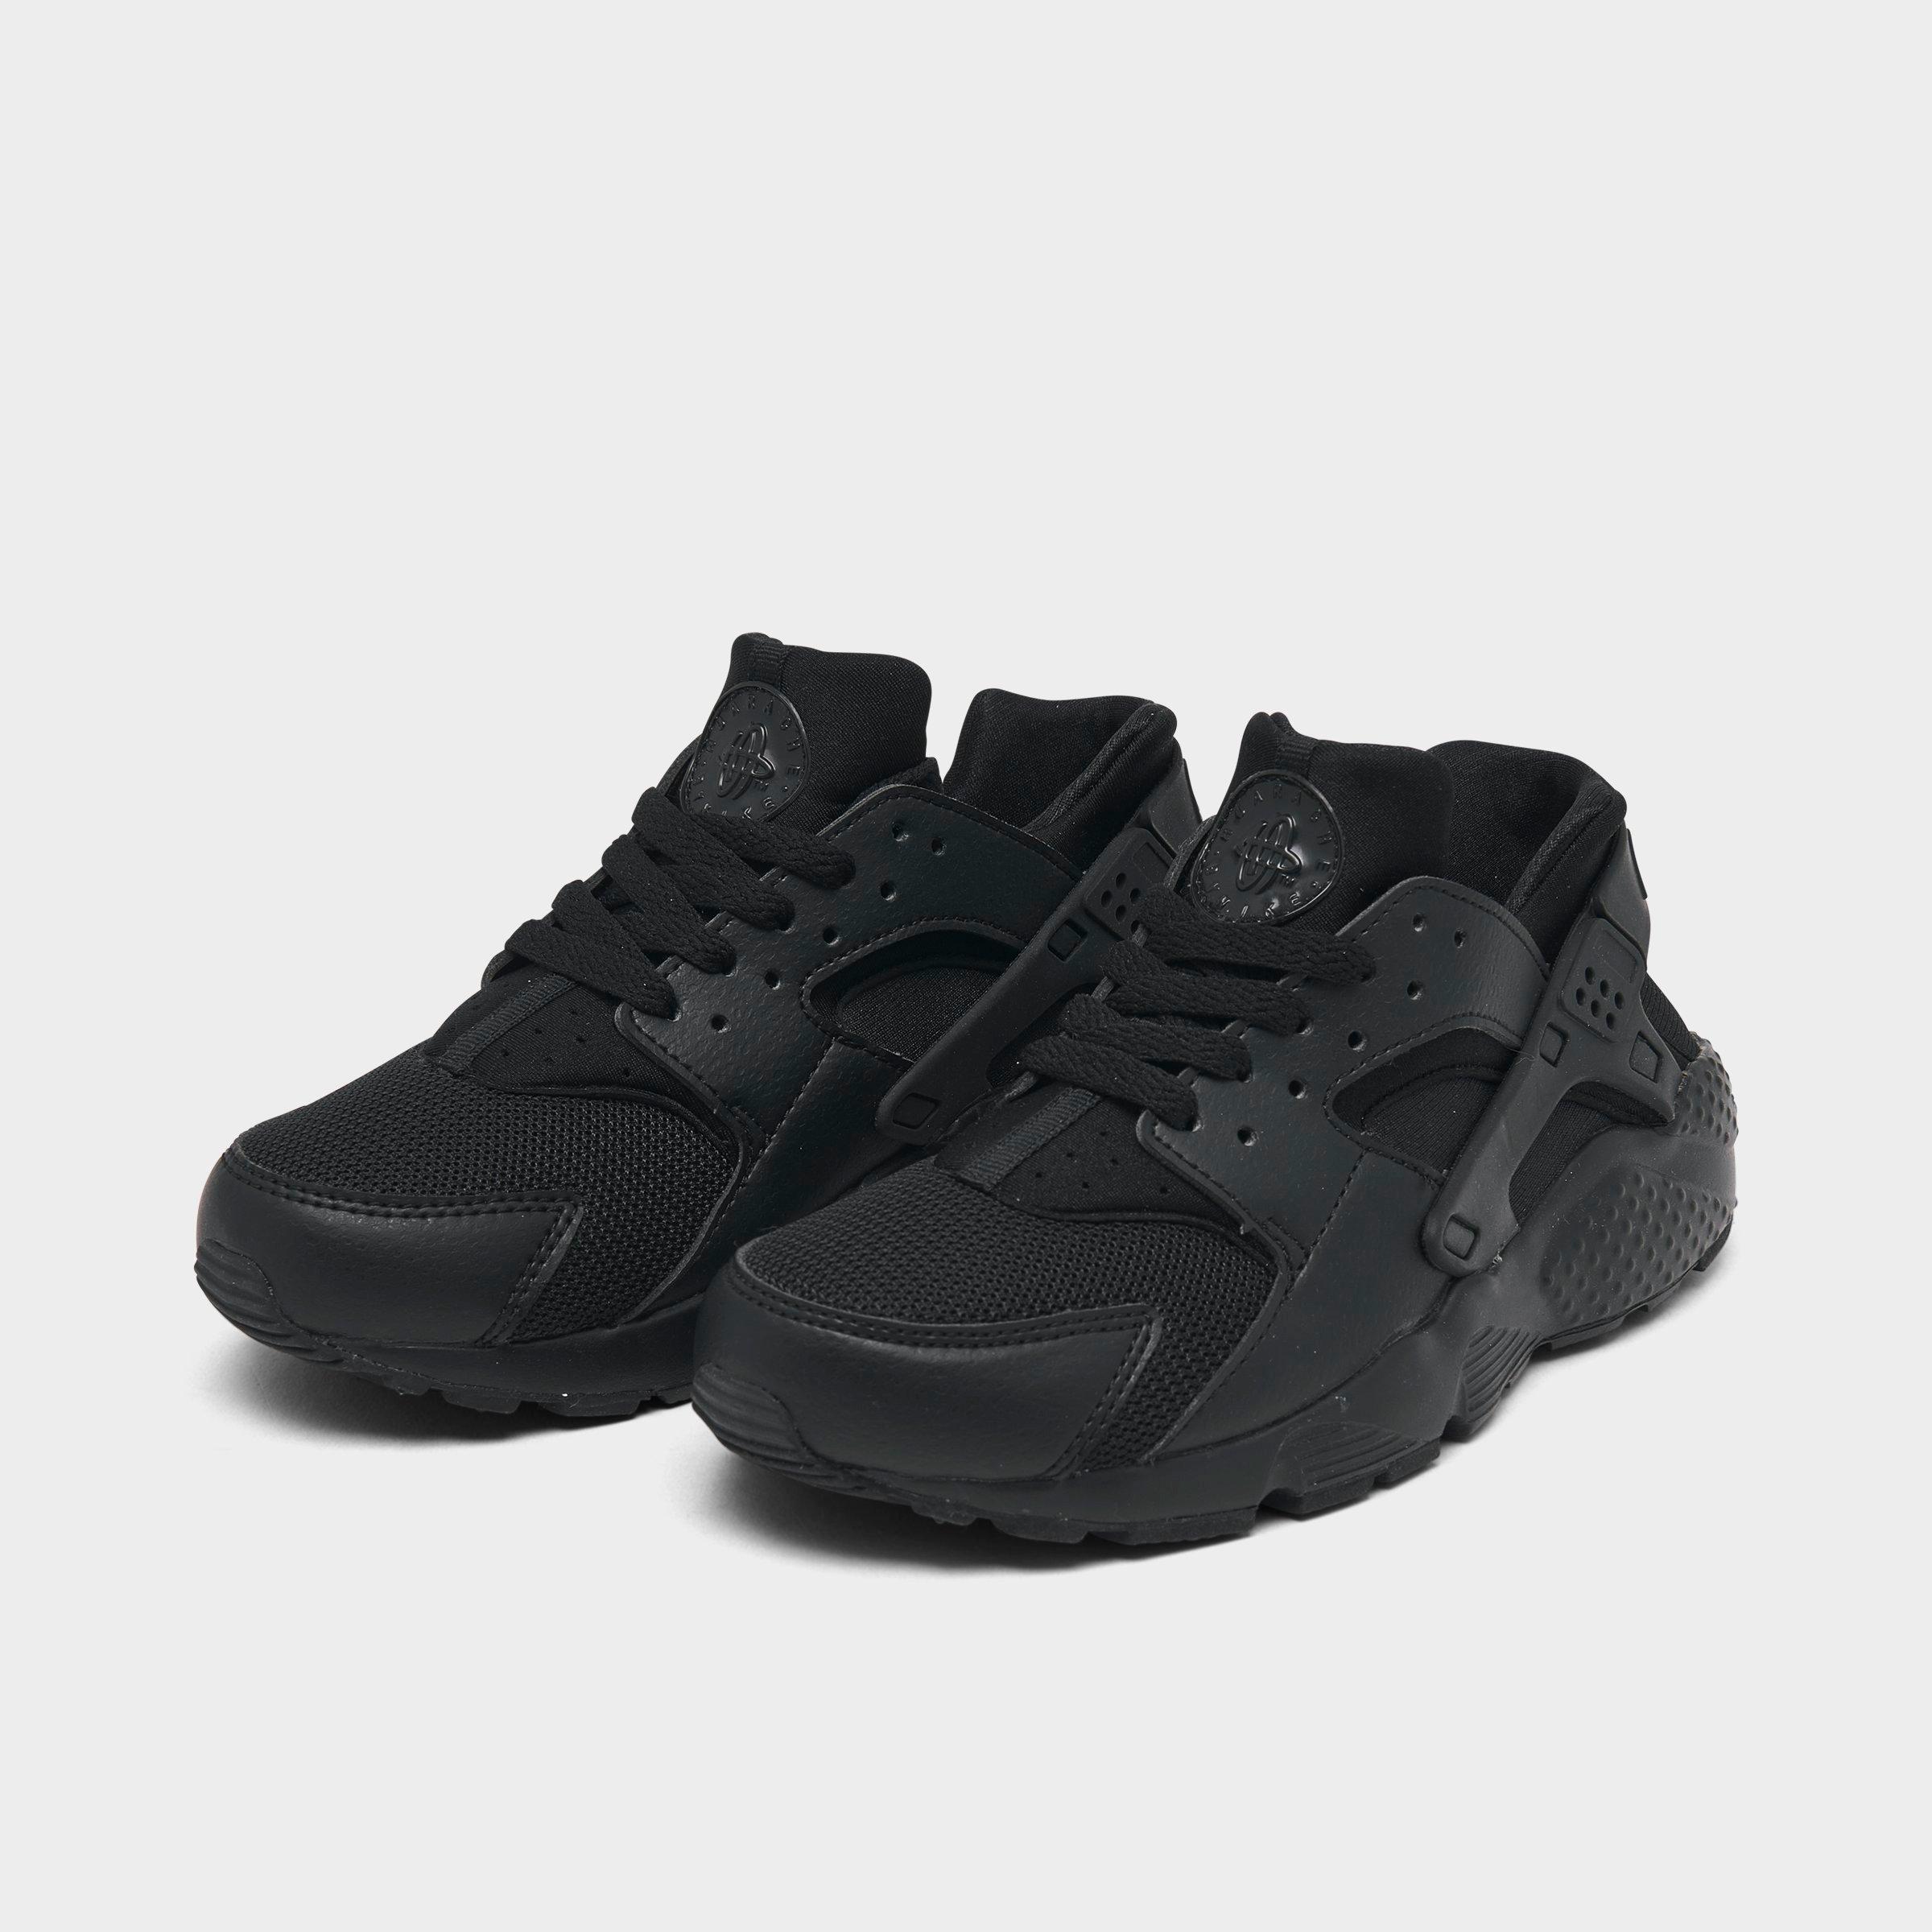 huaraches sneakers black